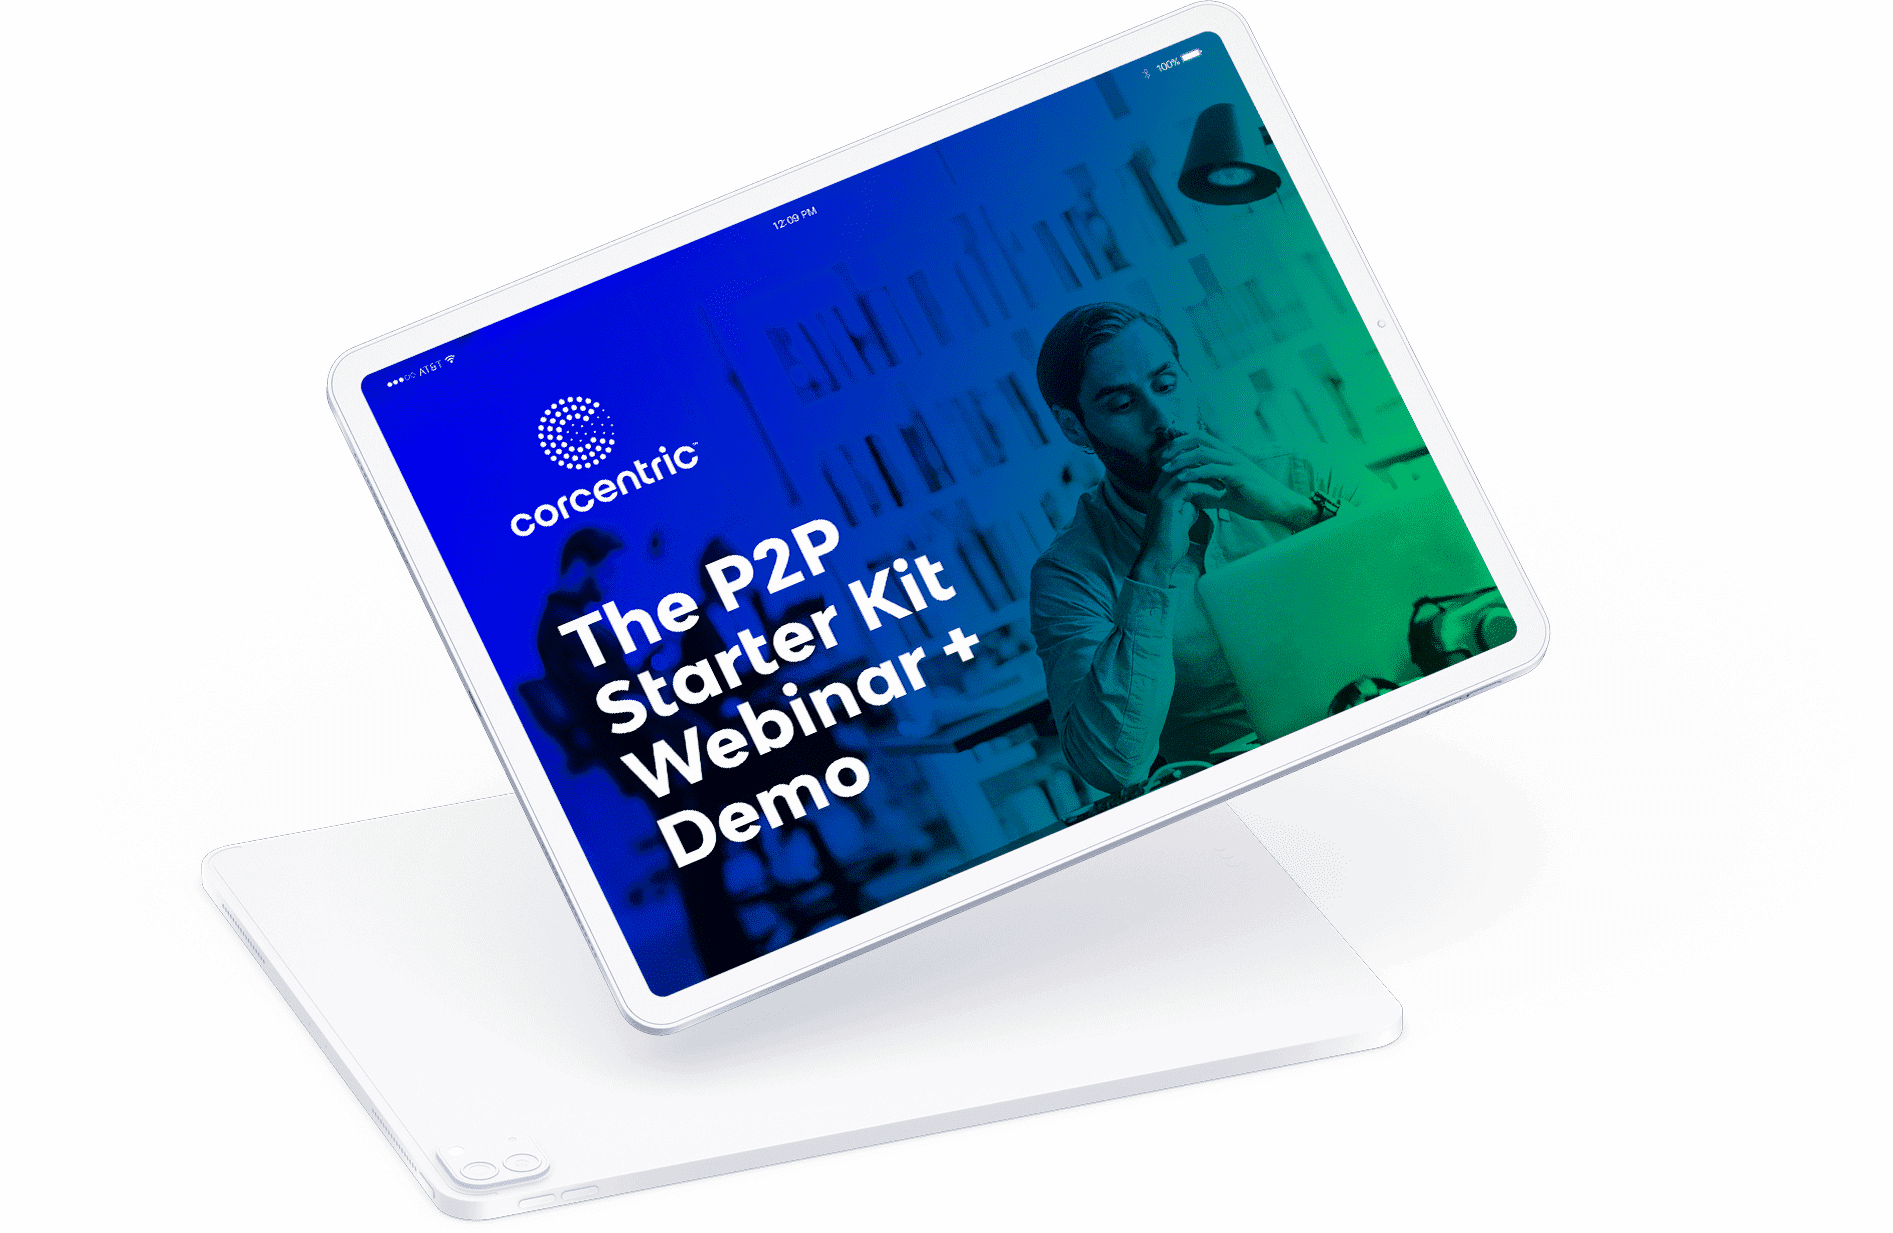 Corcentric Webinar: The P2P Starter Kit